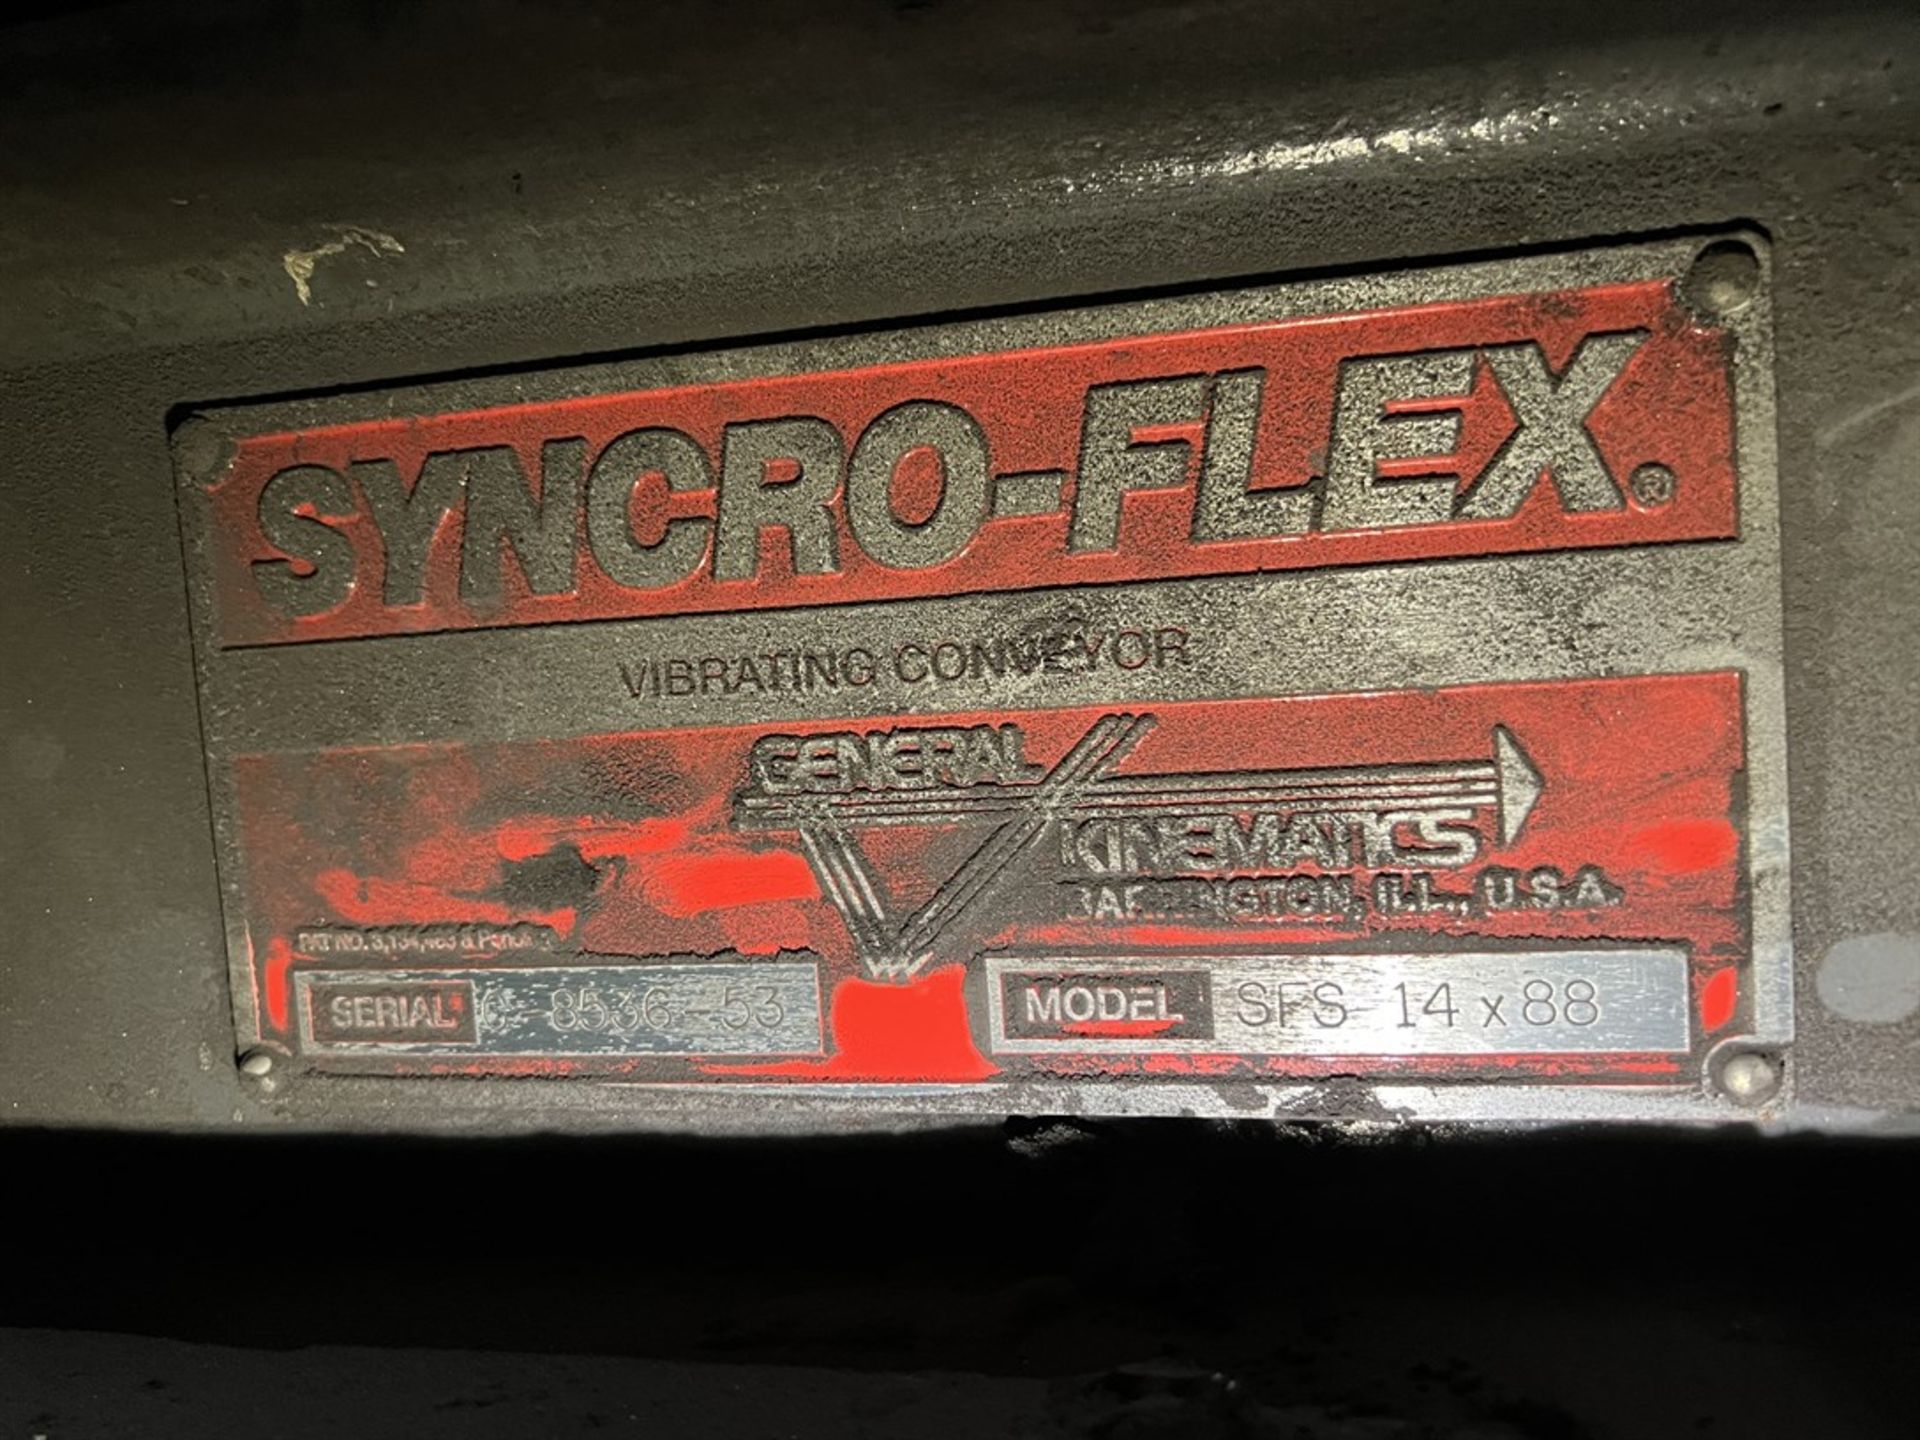 GENERAL KINEMATICS Syncro-Flex SFS 14X88 Vibrating Conveyor, s/n C-8536-53 - Image 6 of 7